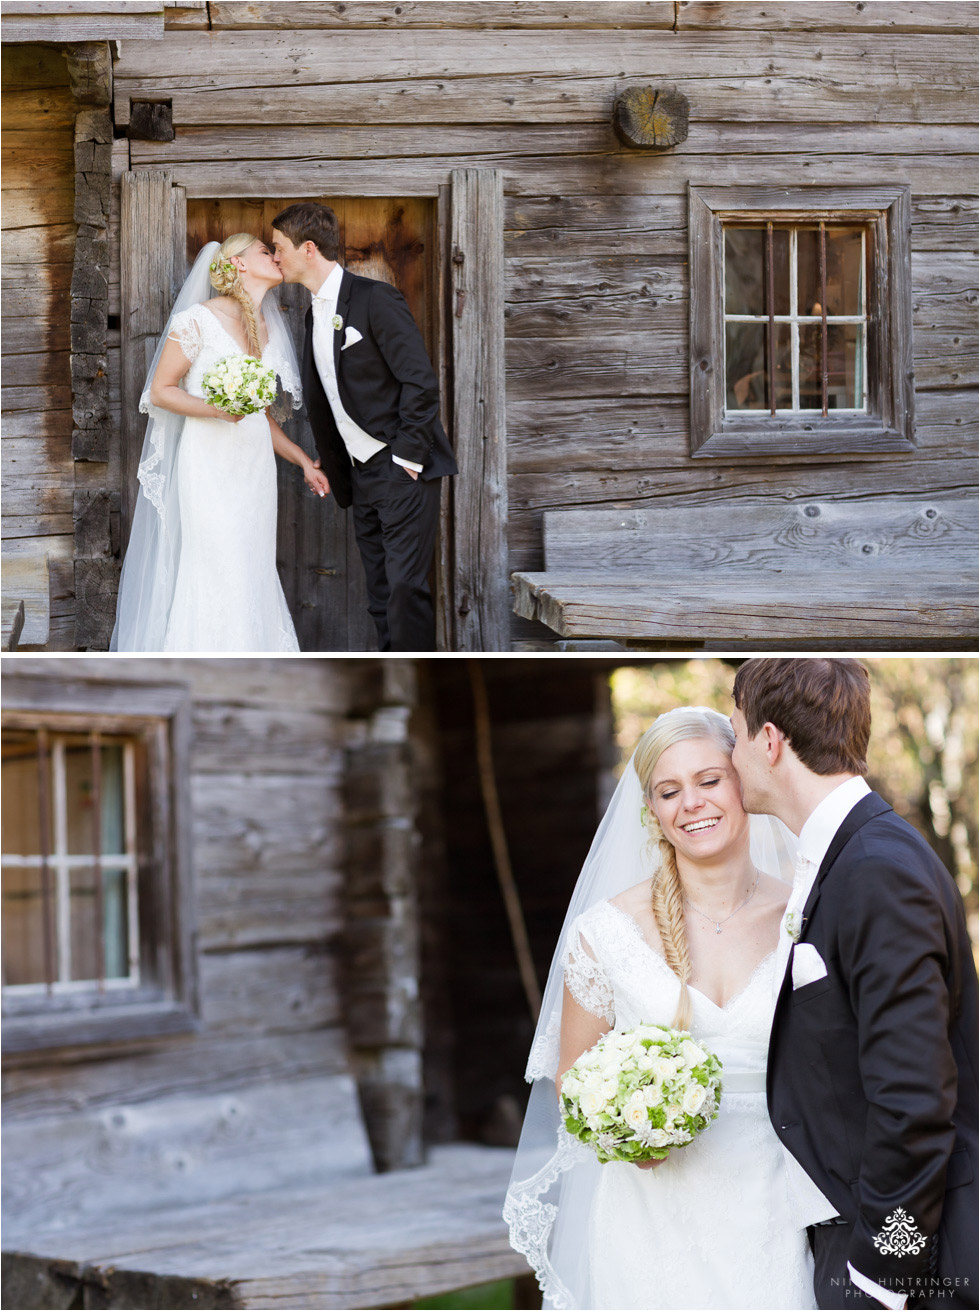 Edelweiss Wedding with Saskia & Martin in the Tyrolean Alps | Zillertal, Tyrol - Blog of Nina Hintringer Photography - Wedding Photography, Wedding Reportage and Destination Weddings